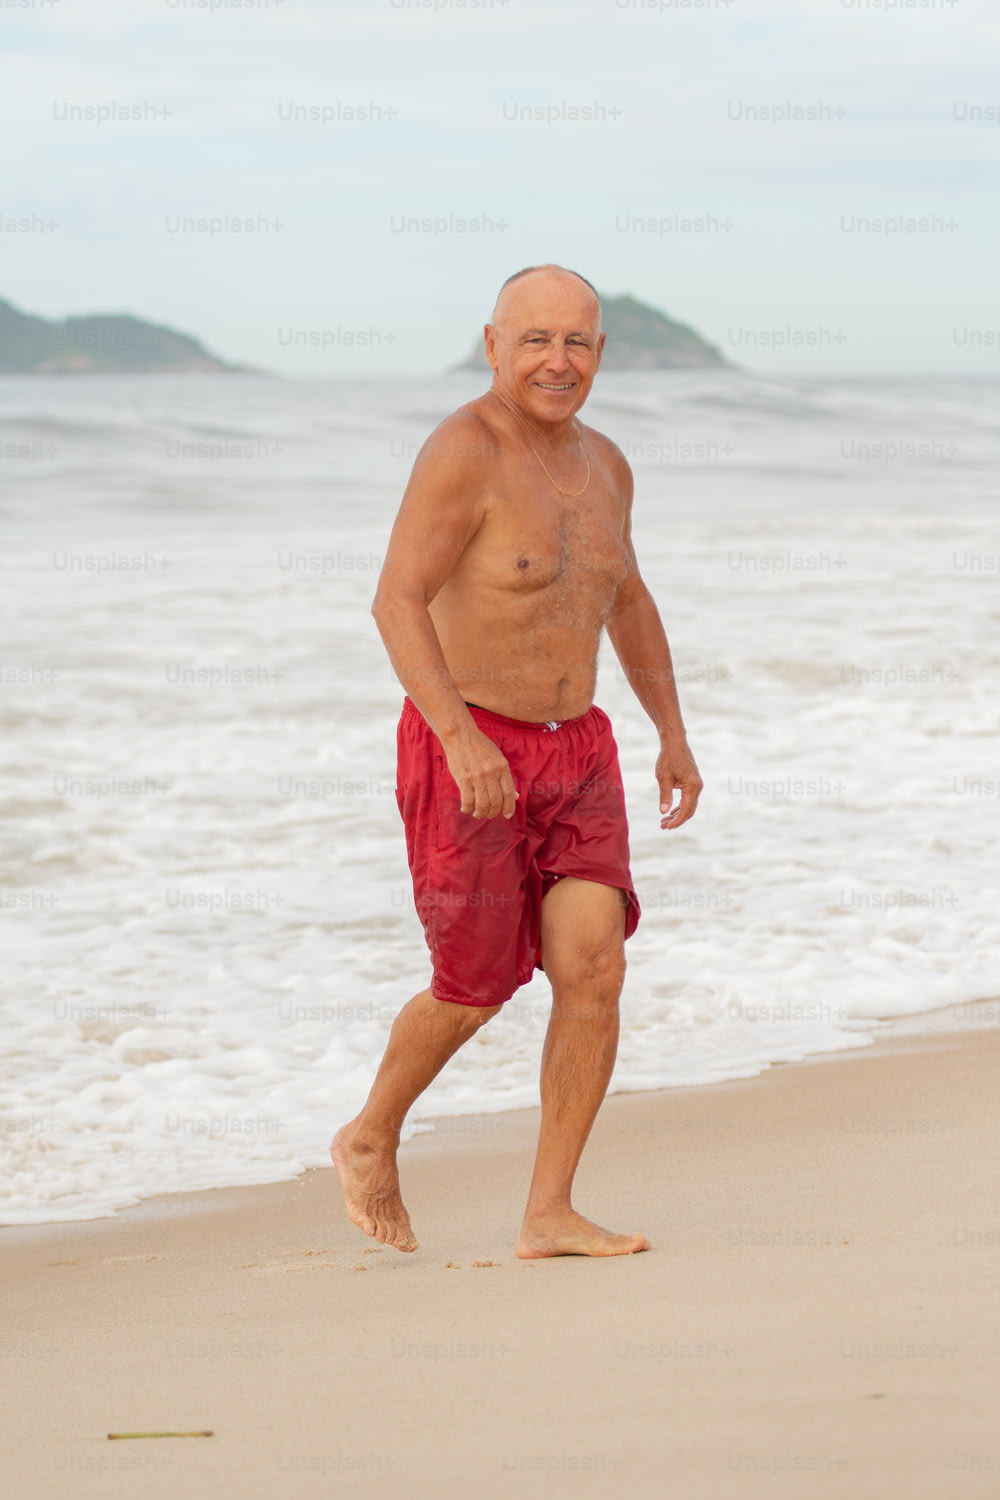 a man walking on a beach next to the ocean